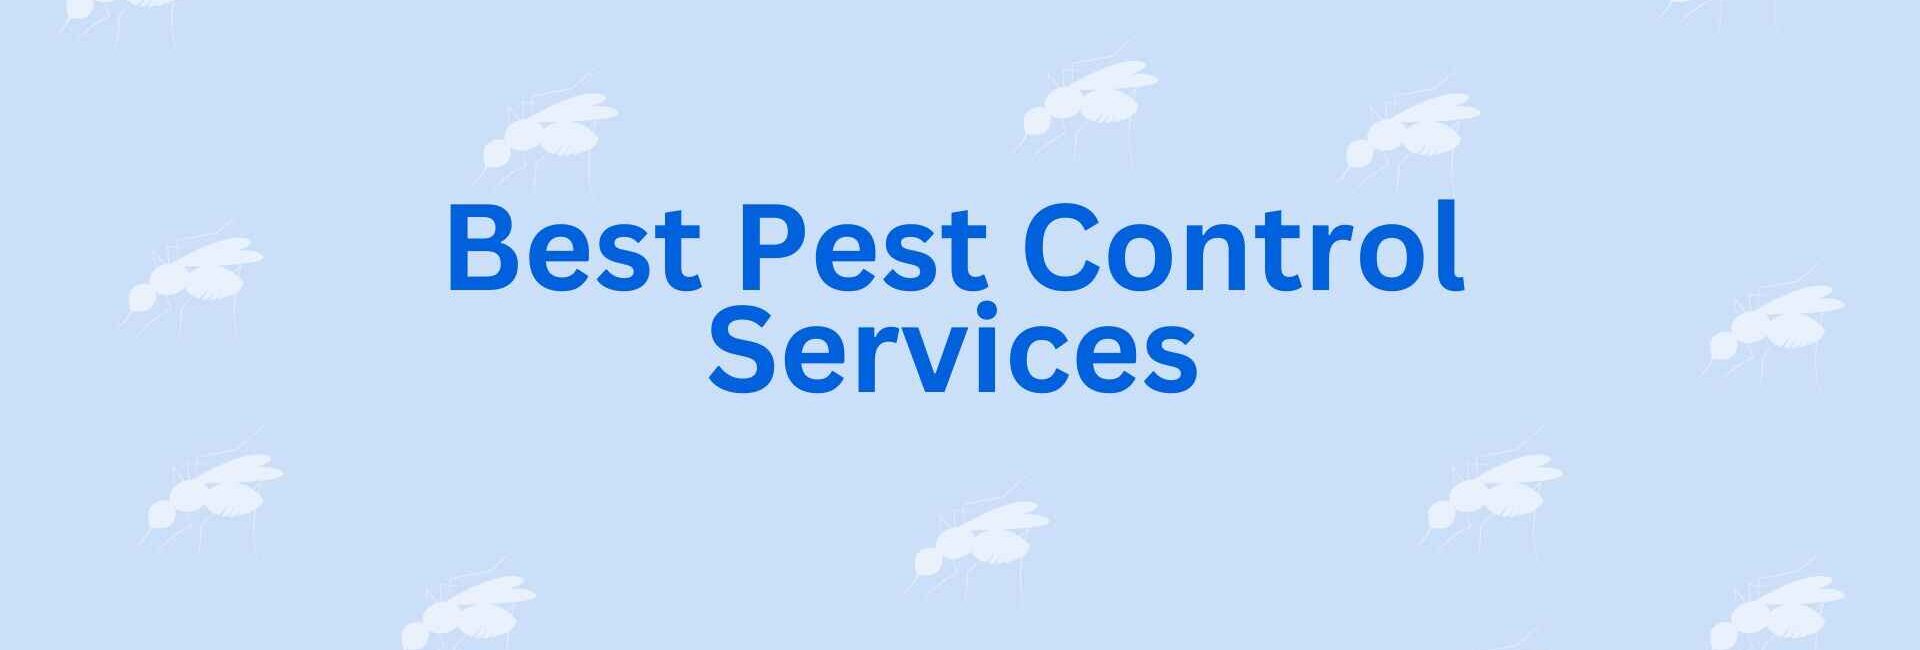 Best Pest Control Services - Pest Control in Noida